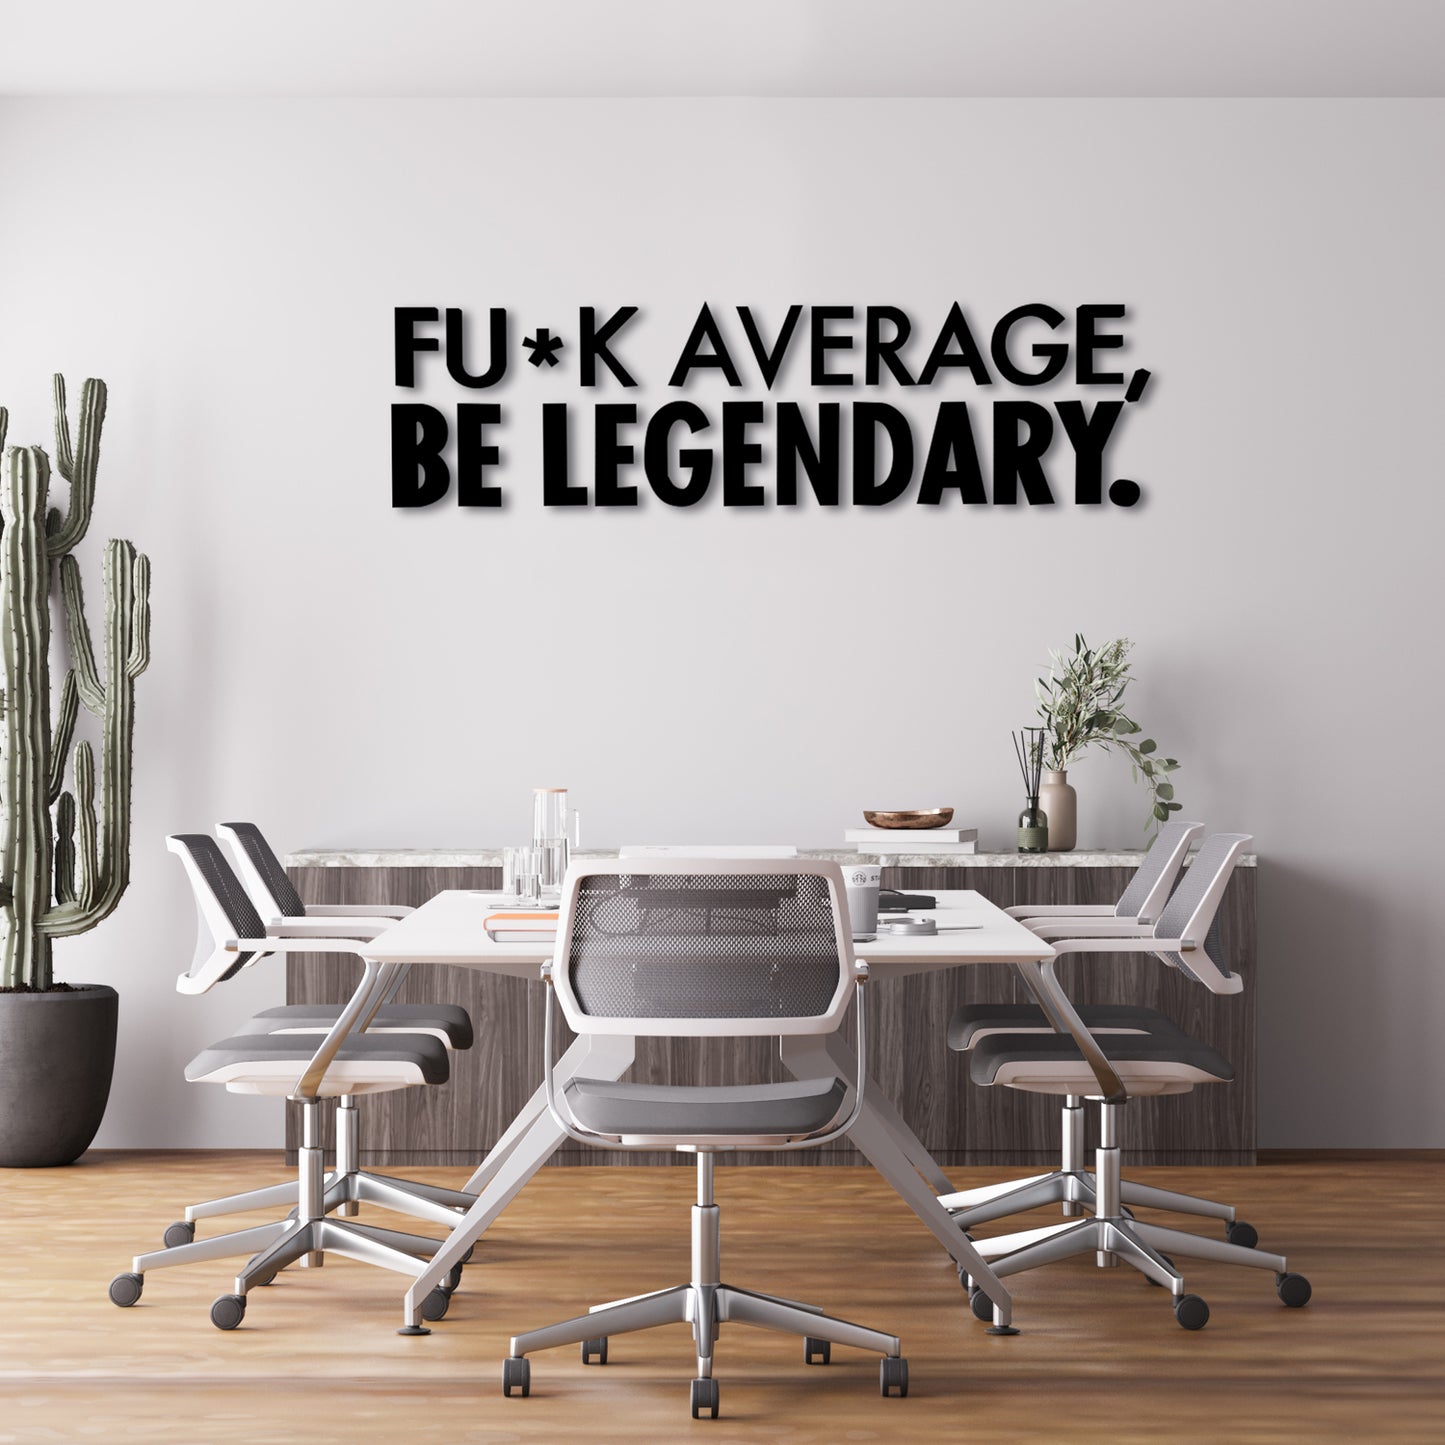 Fu*k Average, Be Legendary 3D Acrylic Wall Sign